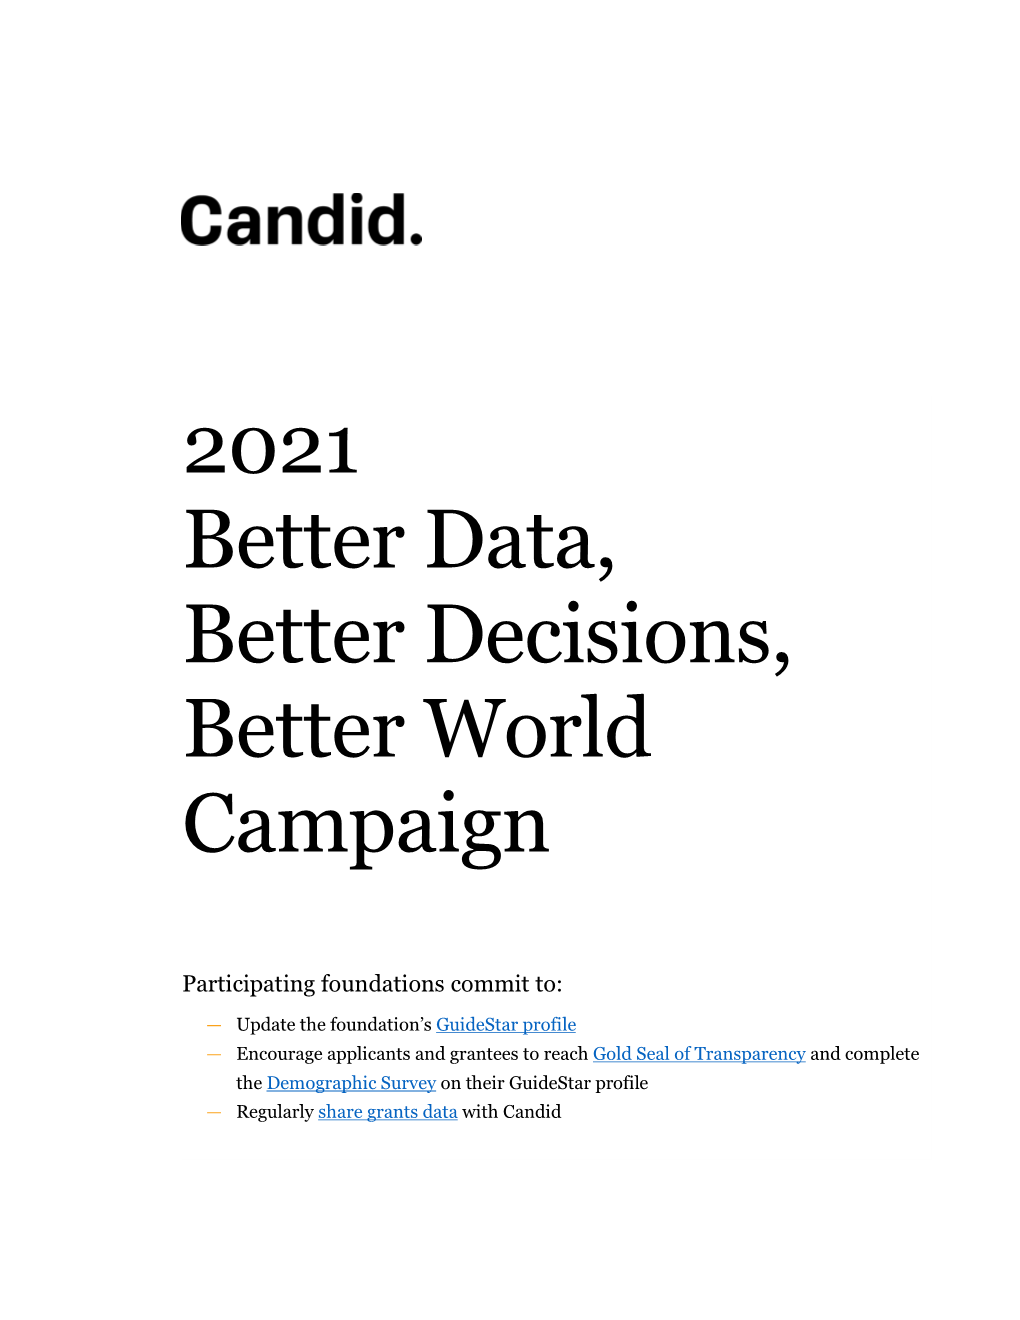 2021 Better Data, Better Decisions, Better World Campaign